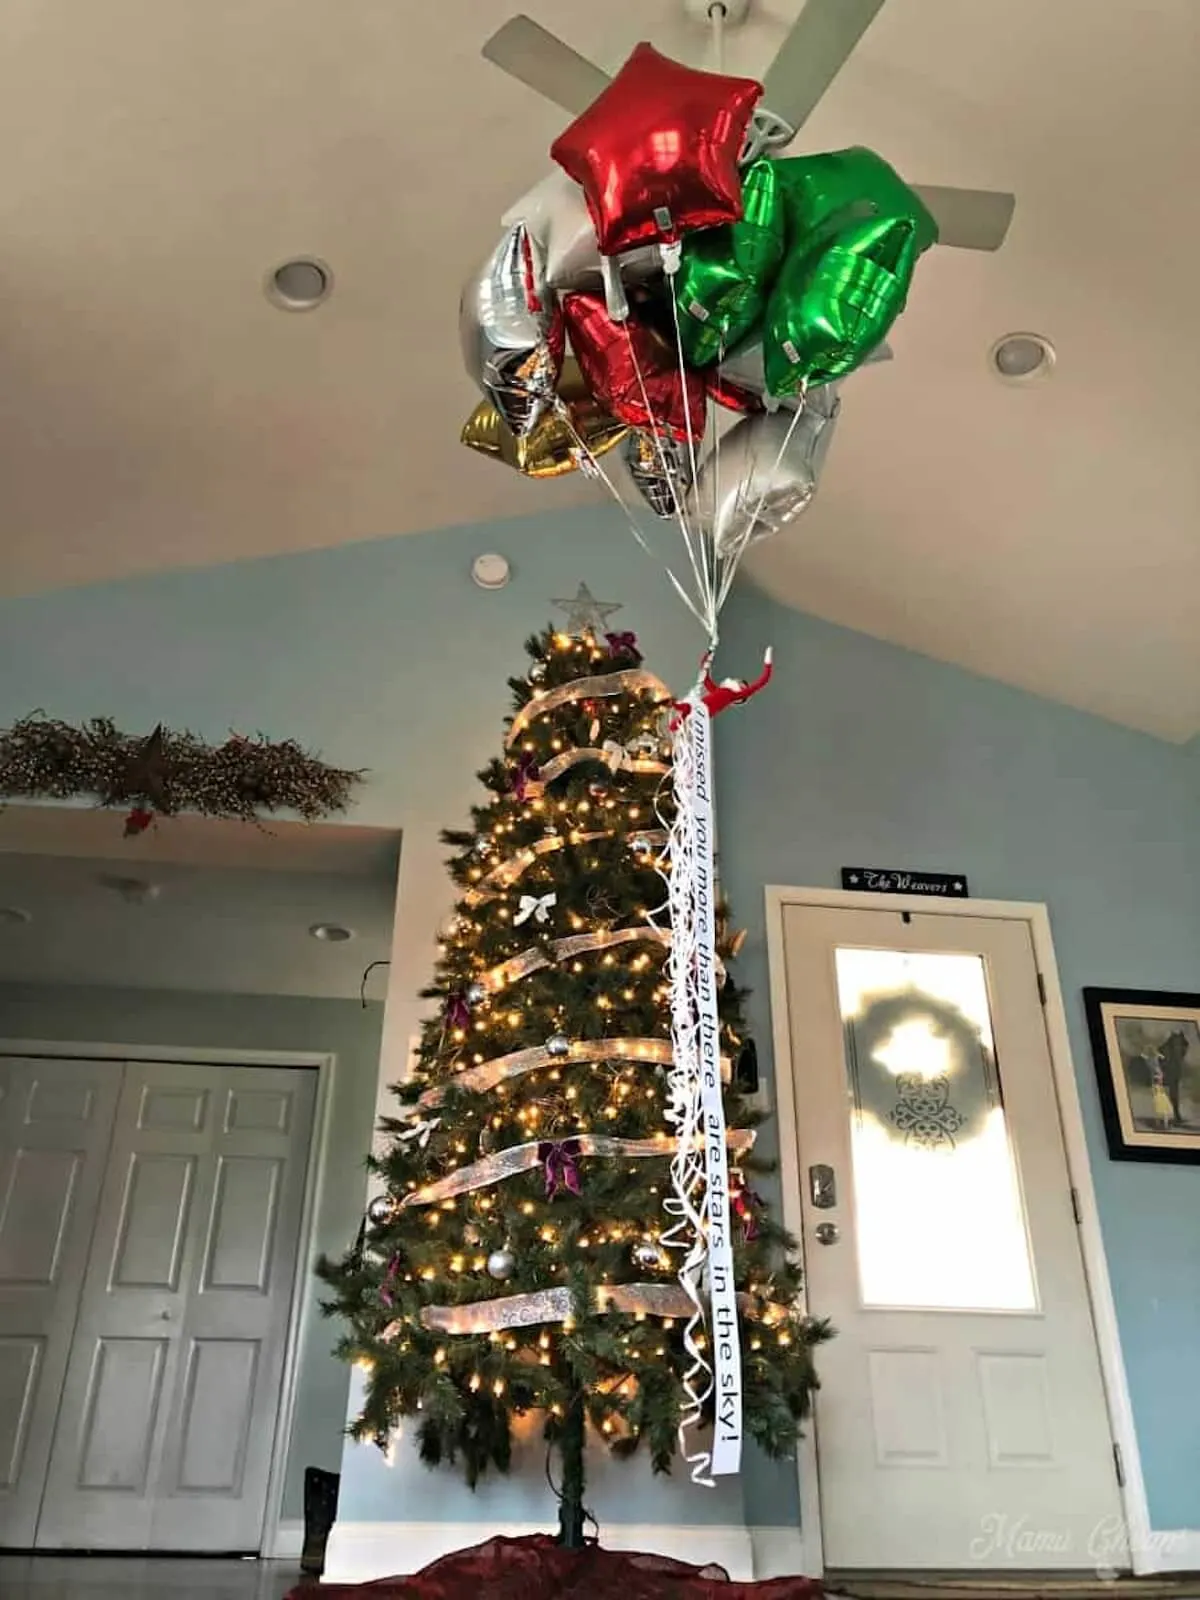 Elf arrival balloon scene hanging next to christmas tree.